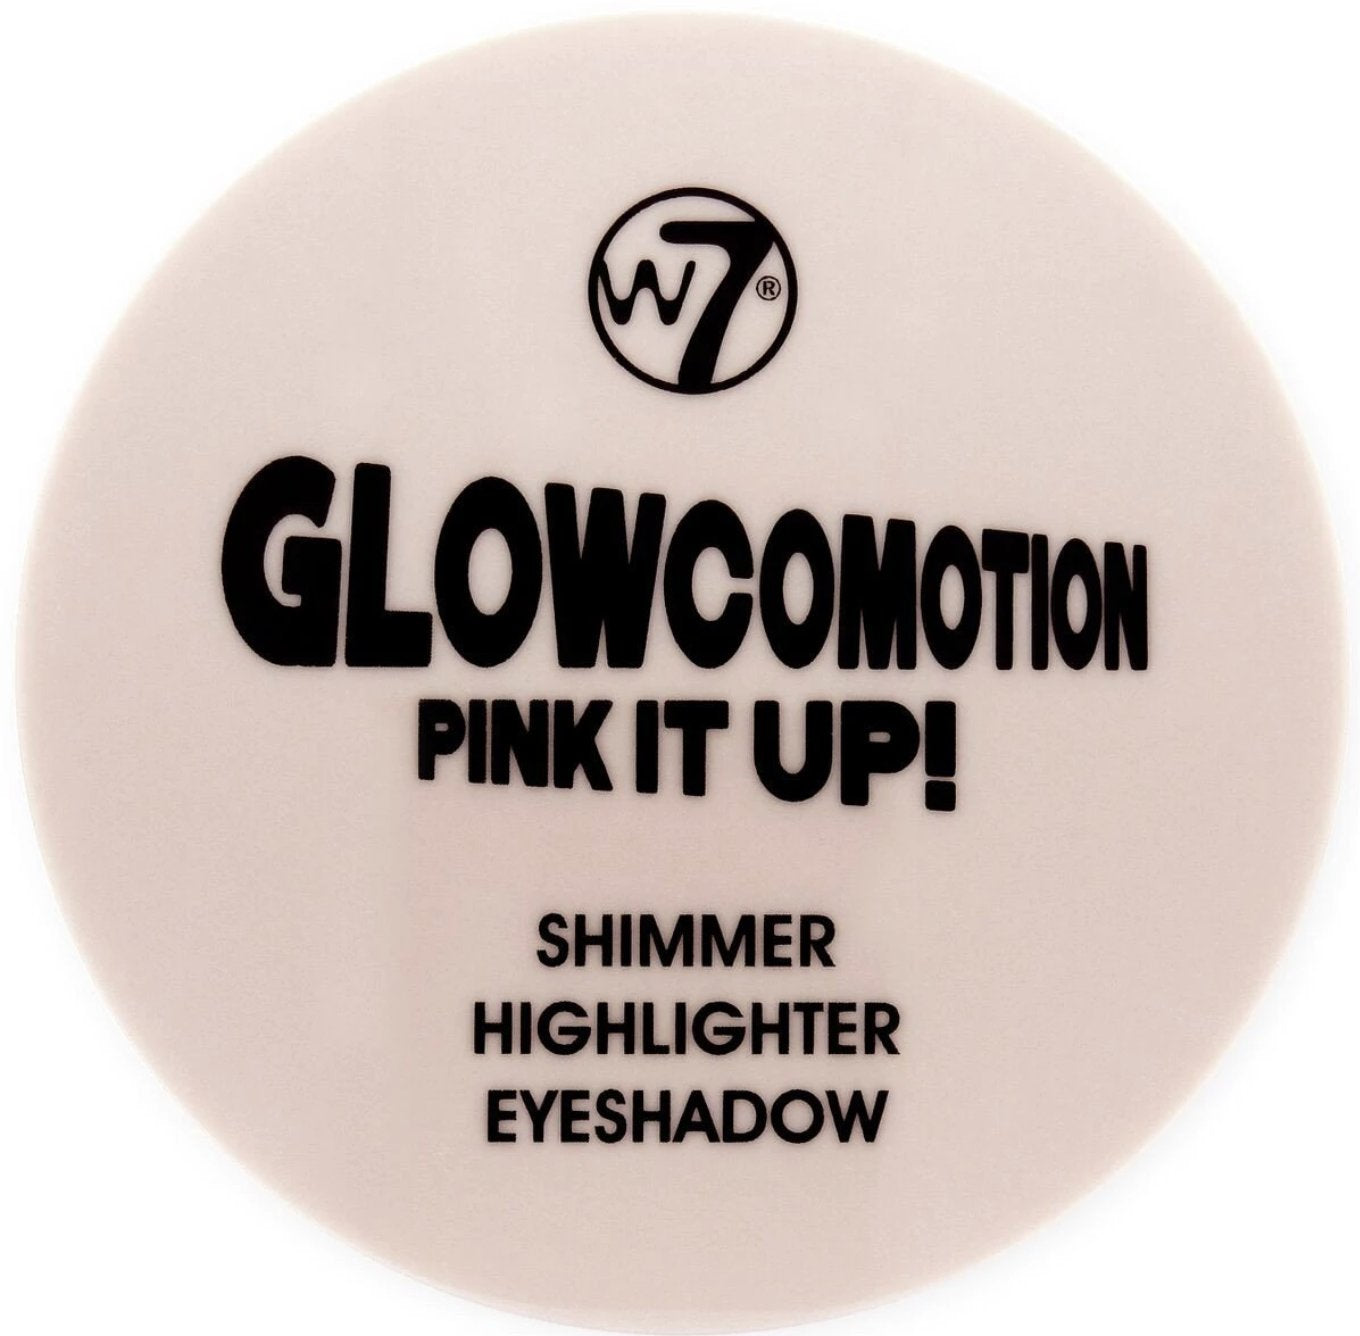 W7 Glowcomotion Pink it up!